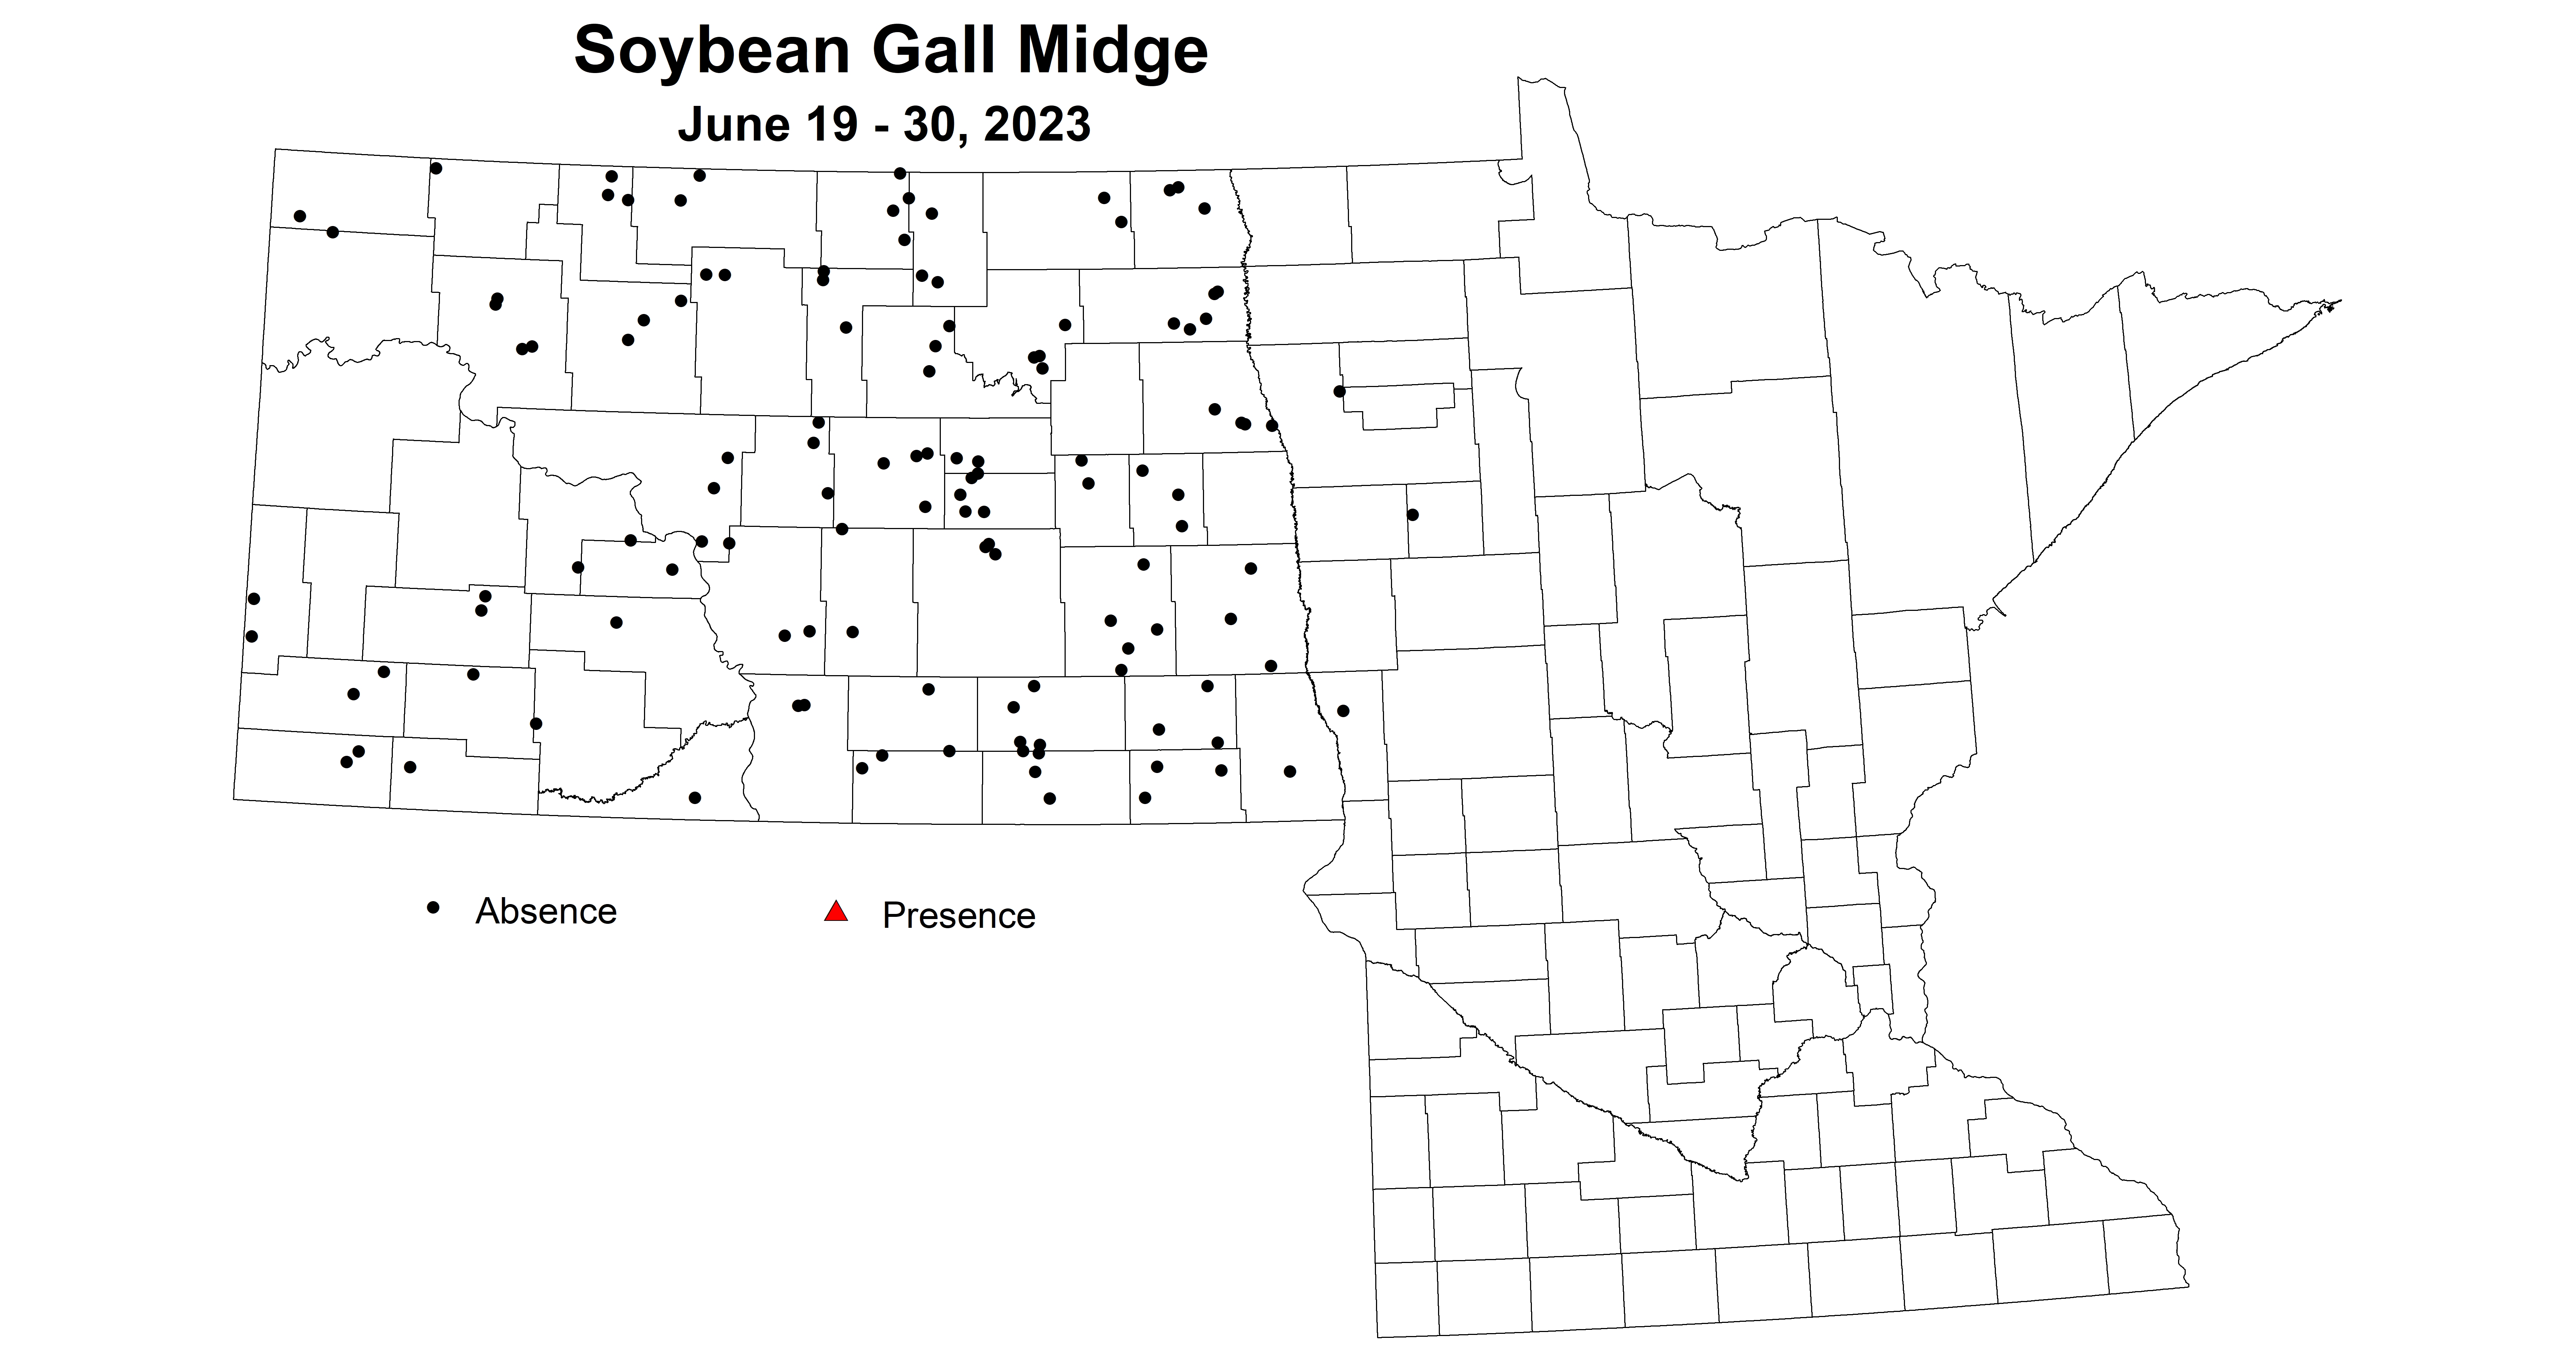 soybean gall midge June 19-30 2023